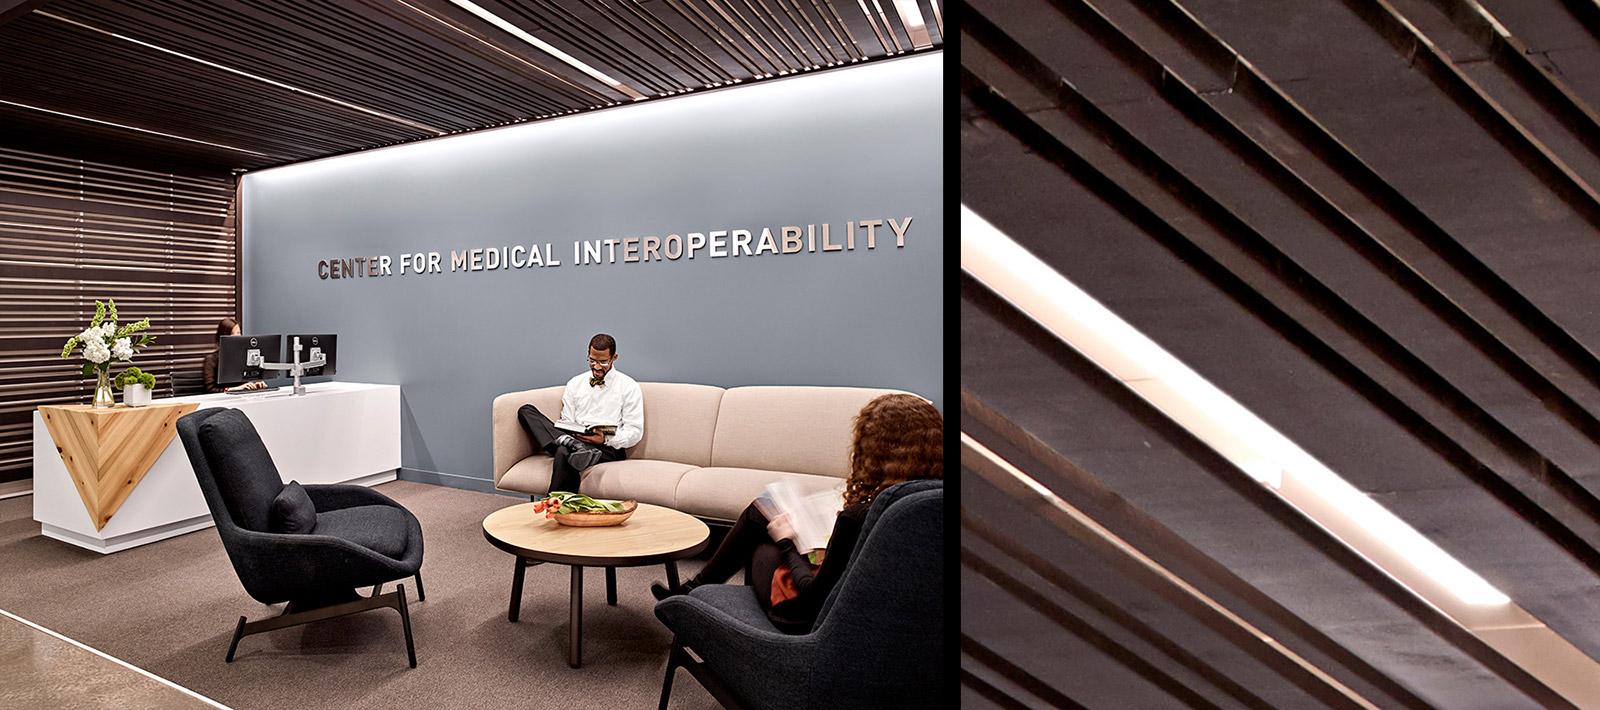 Center for Medical Interoperability Waiting Room Reception Seem 2